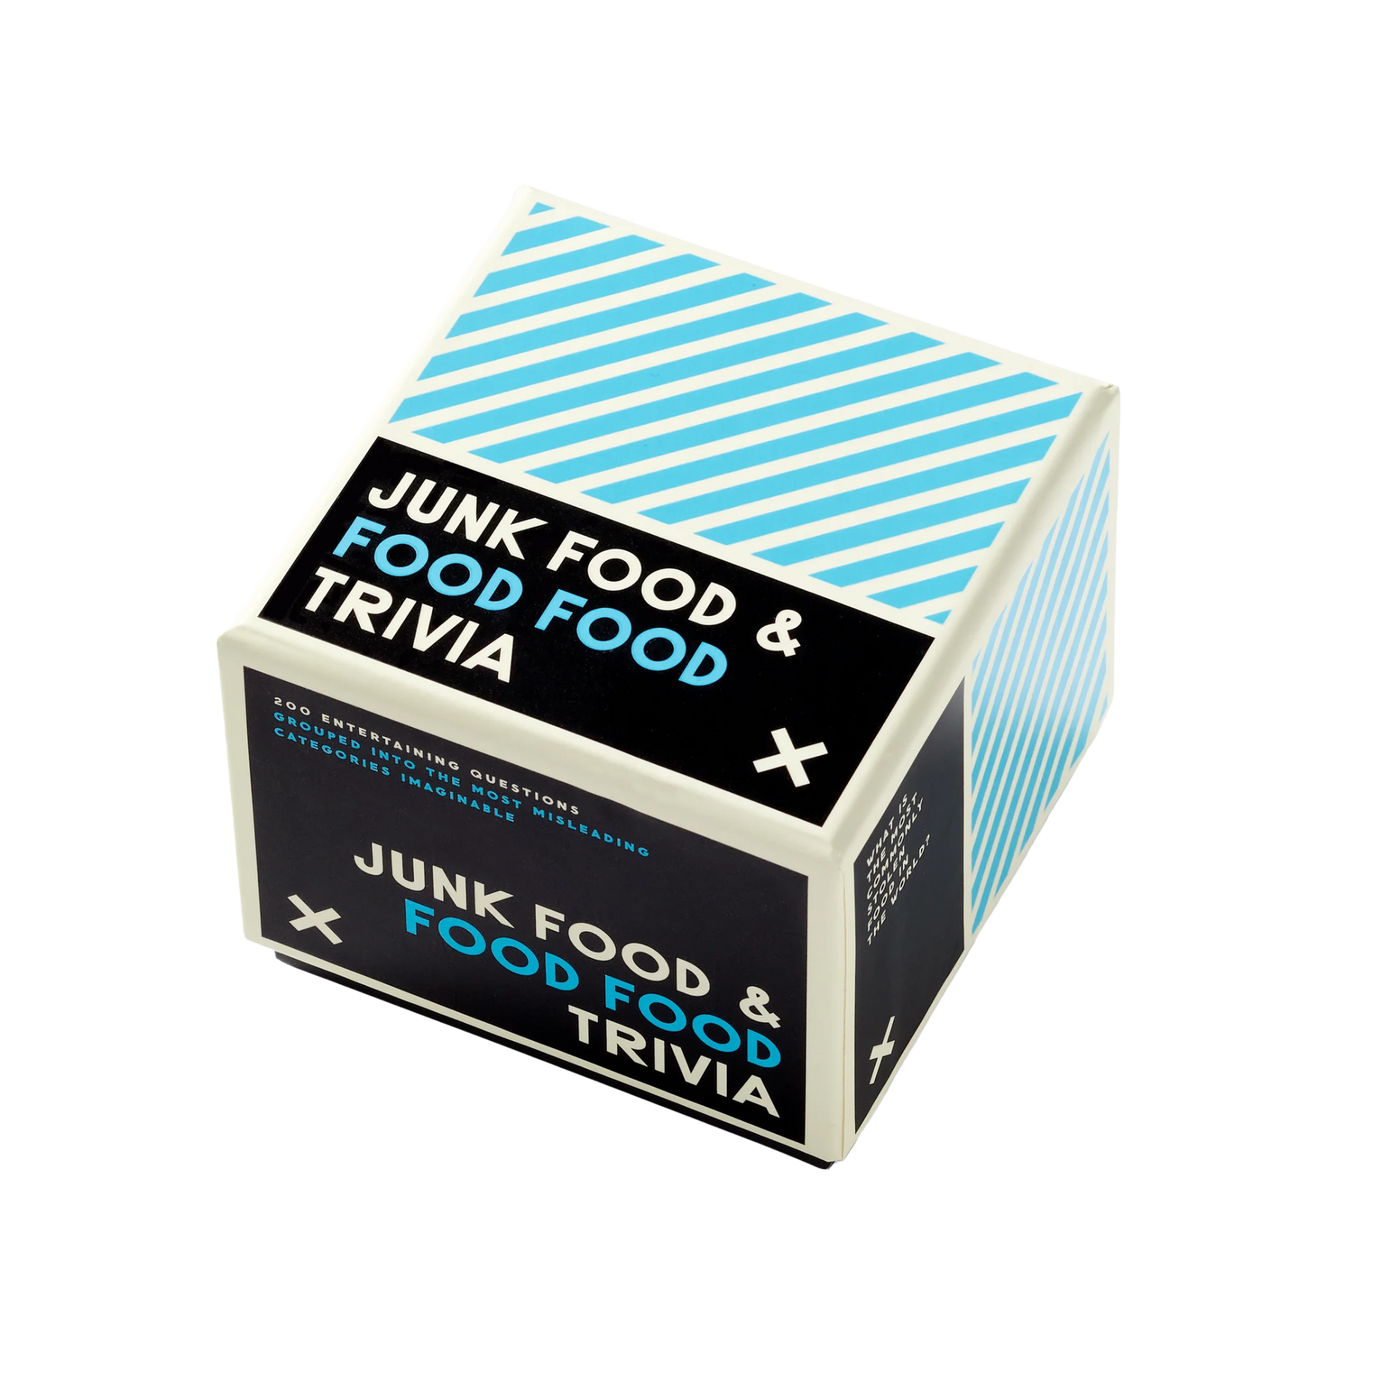 Trivia Junk Food and Food Food